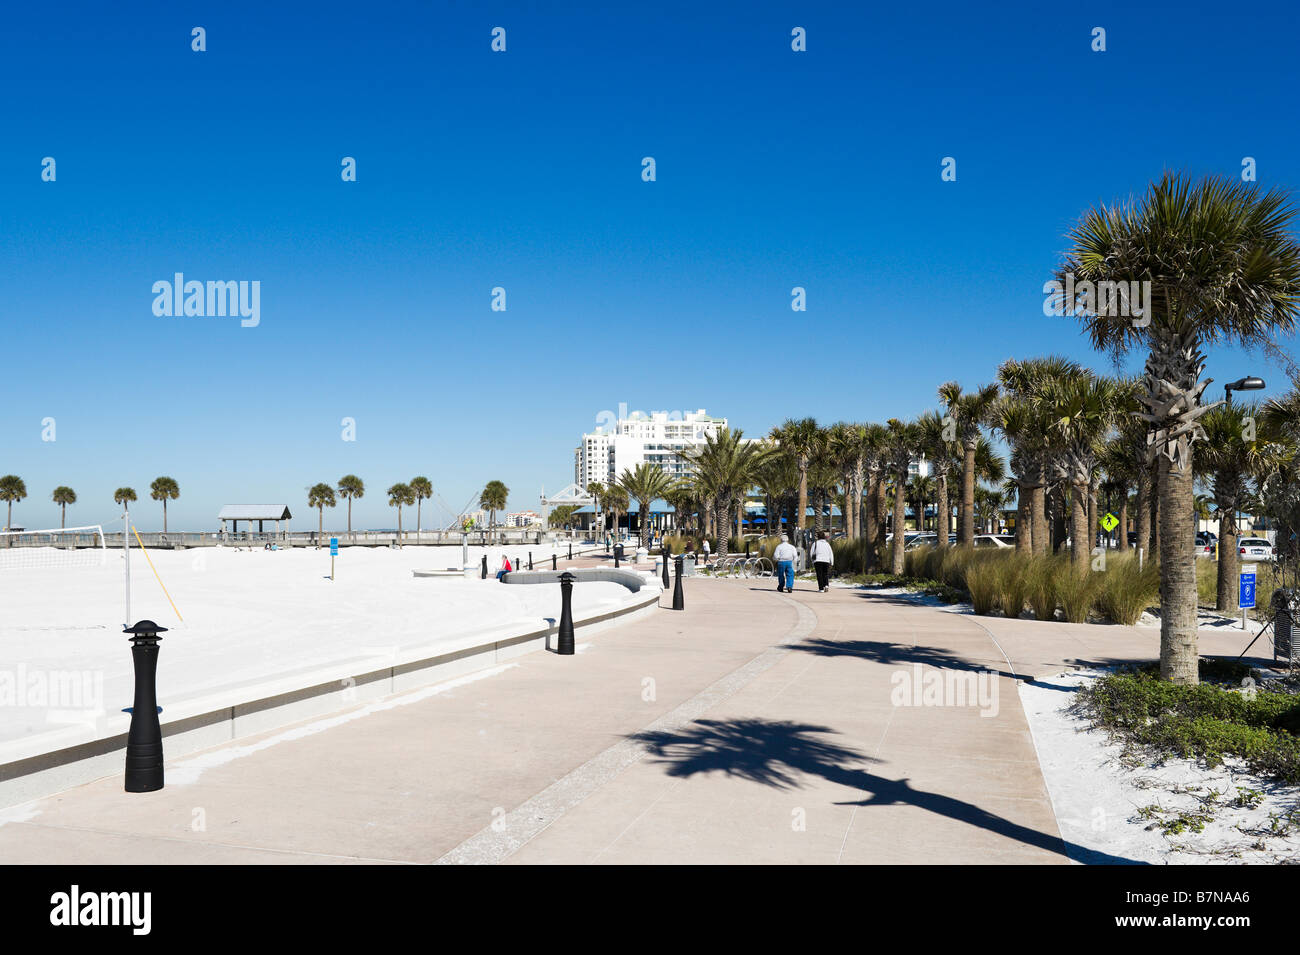 Promenade near to the Pier at Clearwater Beach, Gulf Coast, Florida, USA Stock Photo